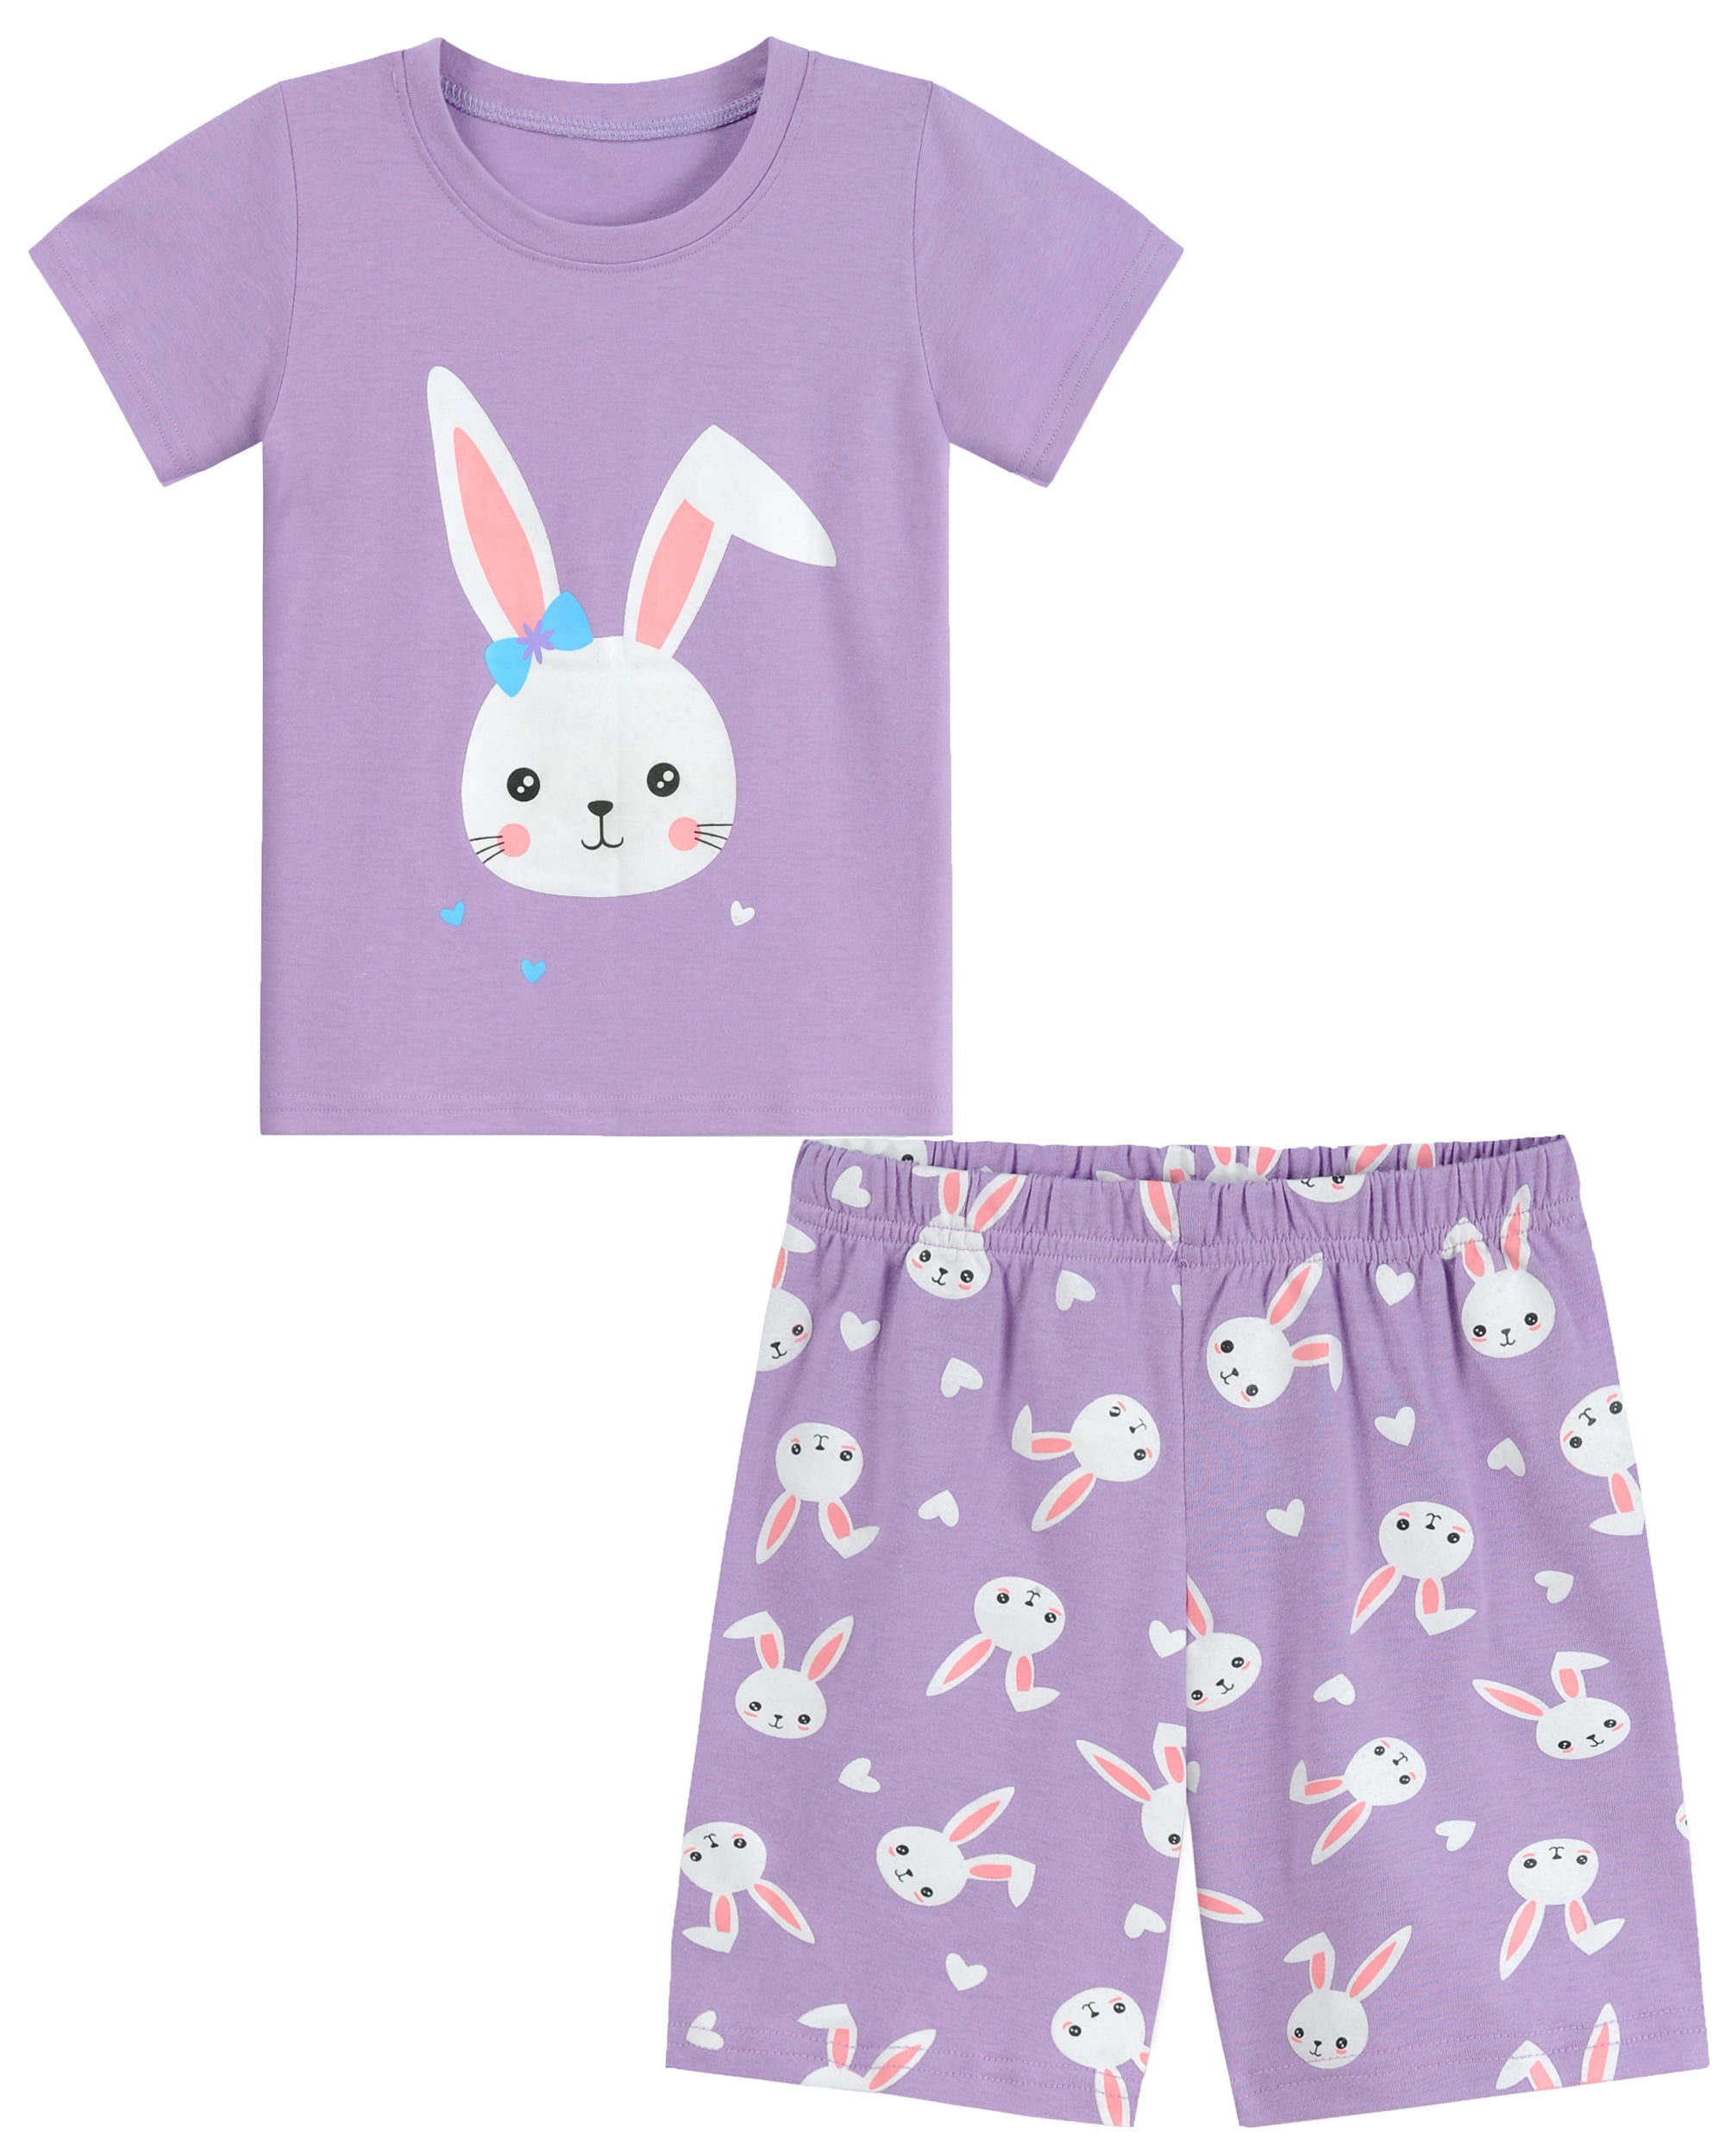 Little Girls Pajamas Unicorn Purple Short Sleeve PJs Set 100% Cotton Toddler Kids Summer Sleepwear 2-8T